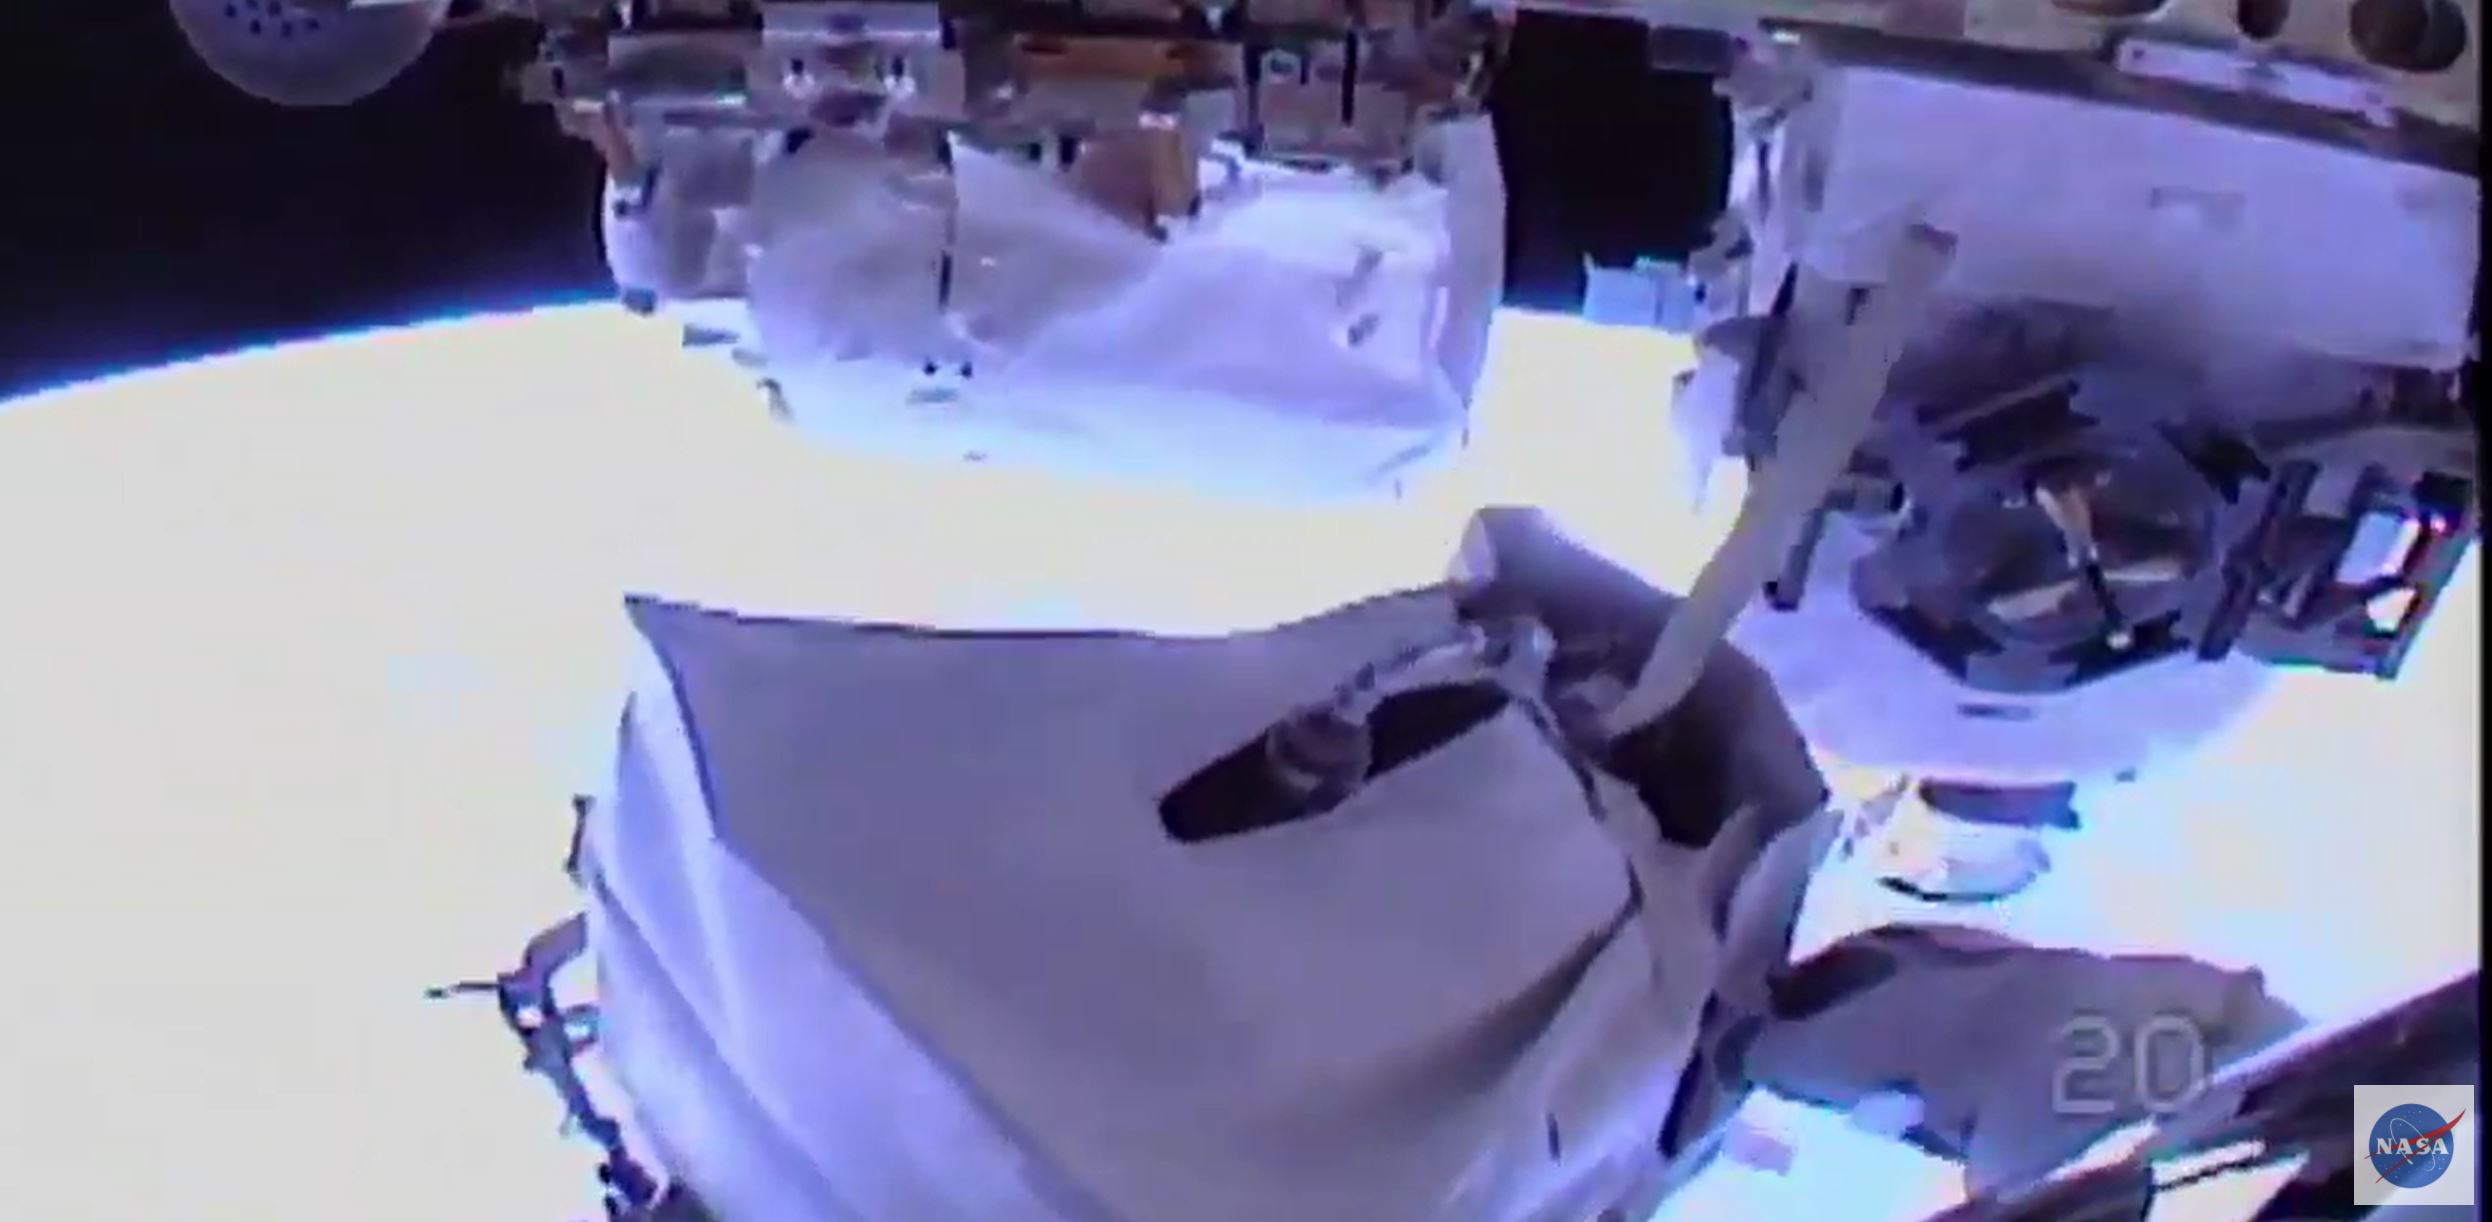 WATCH LIVE: NASA Spacewalk happening now